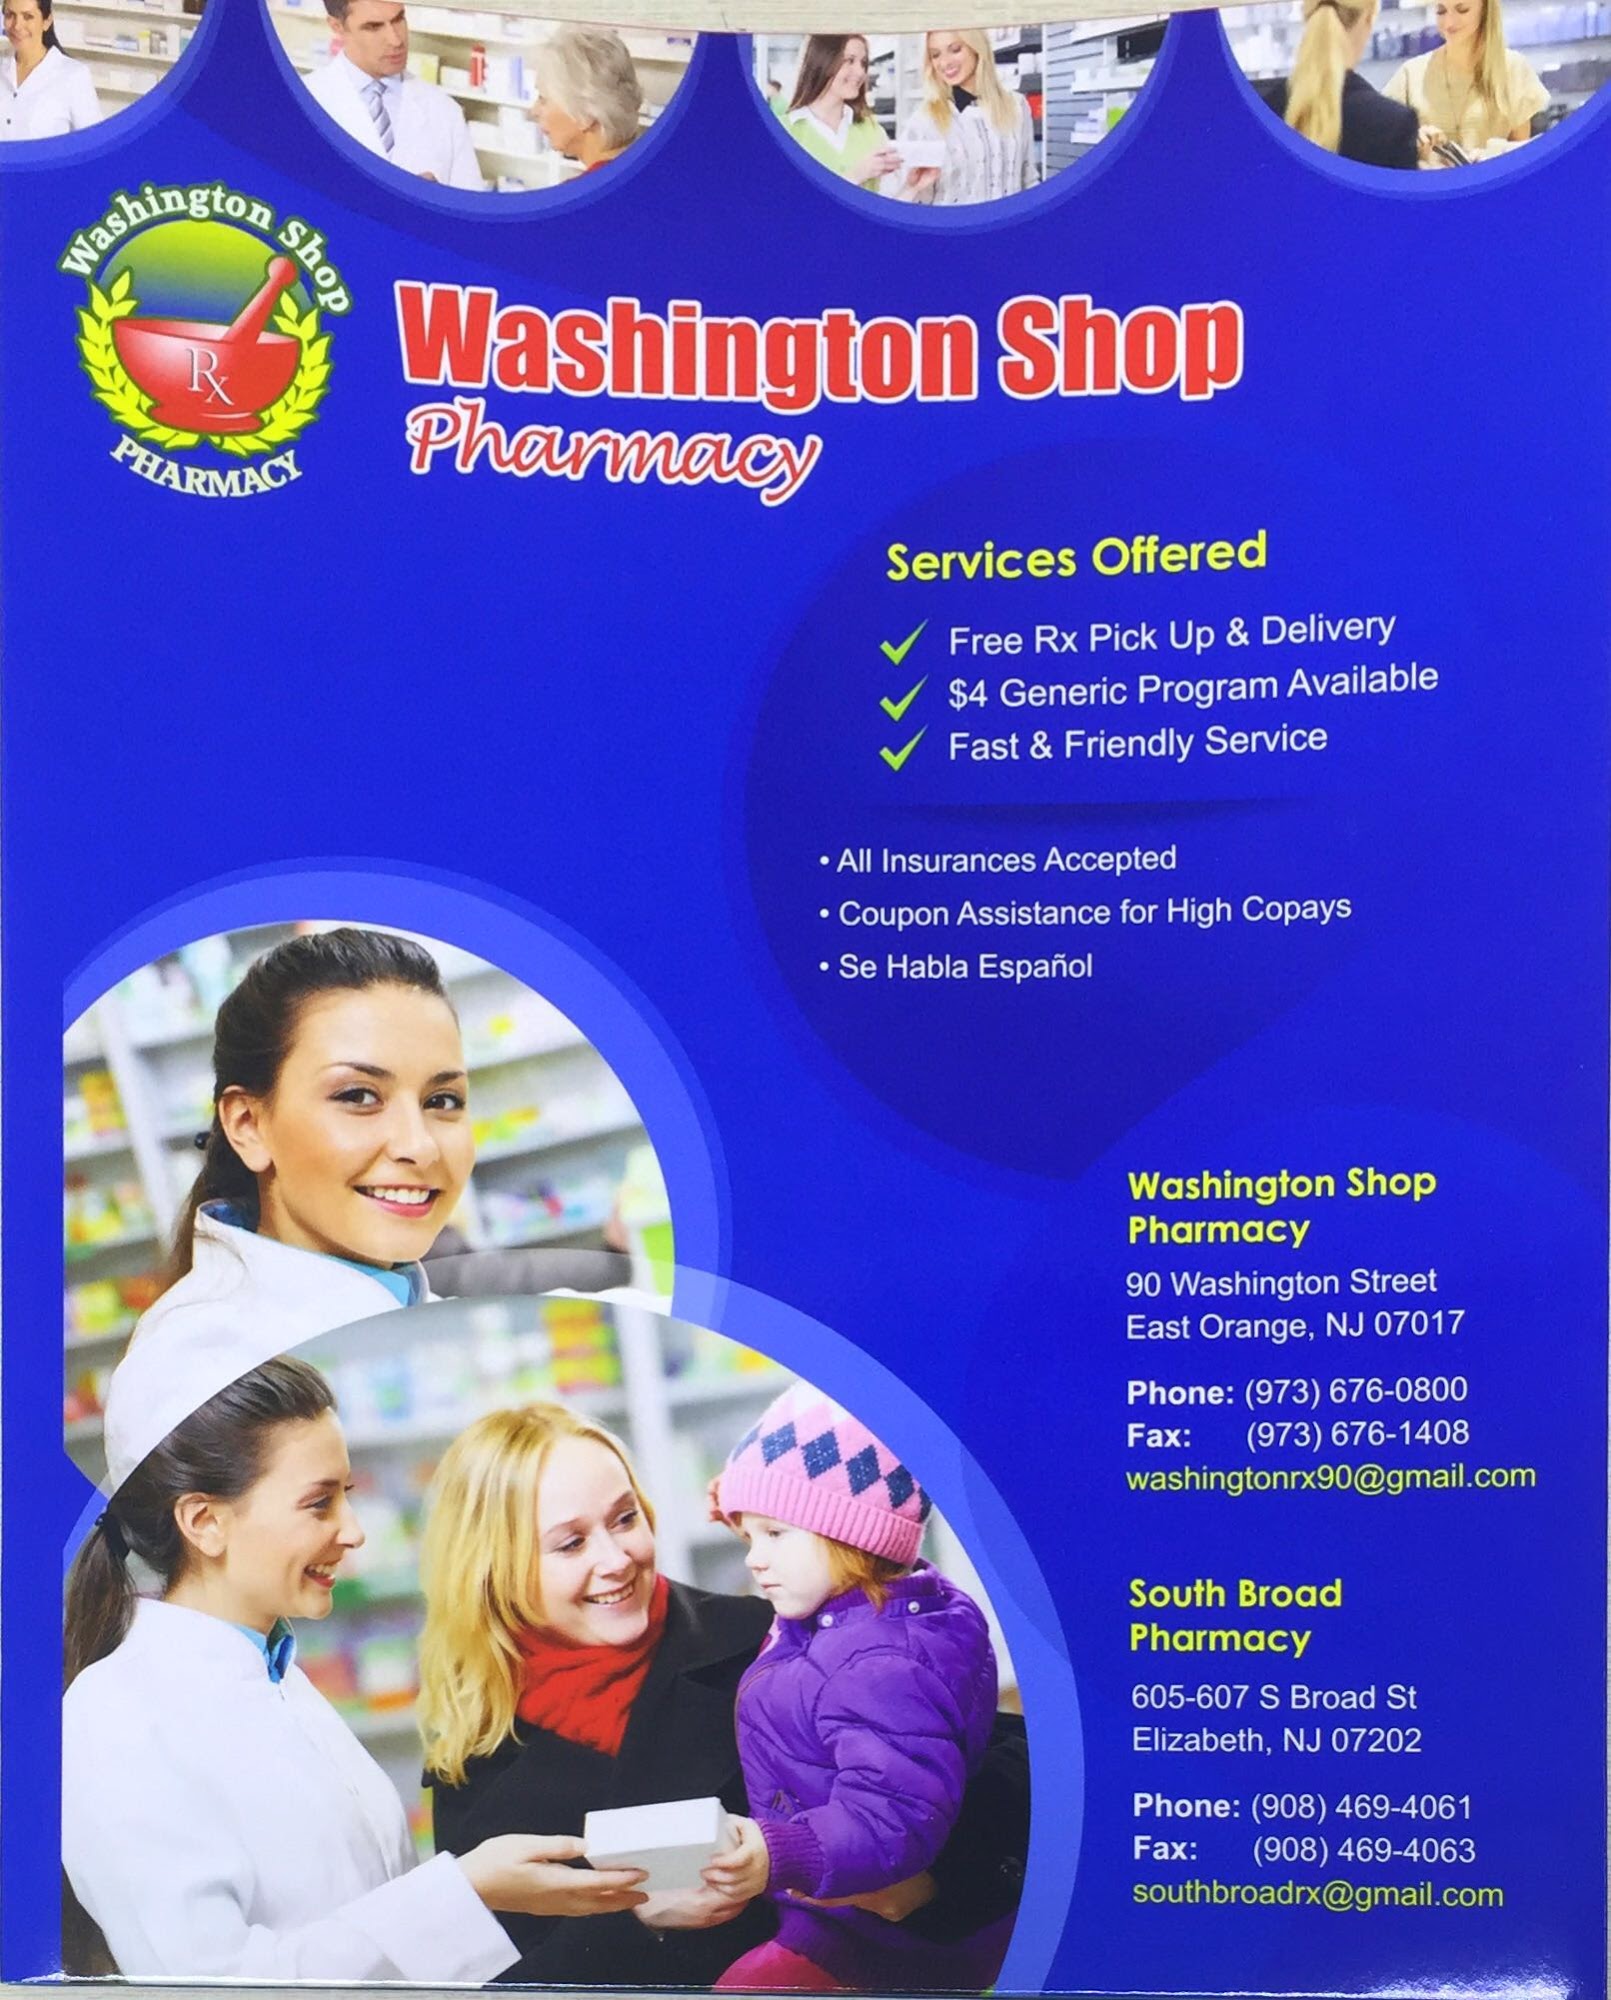 Washington Shop Pharmacy